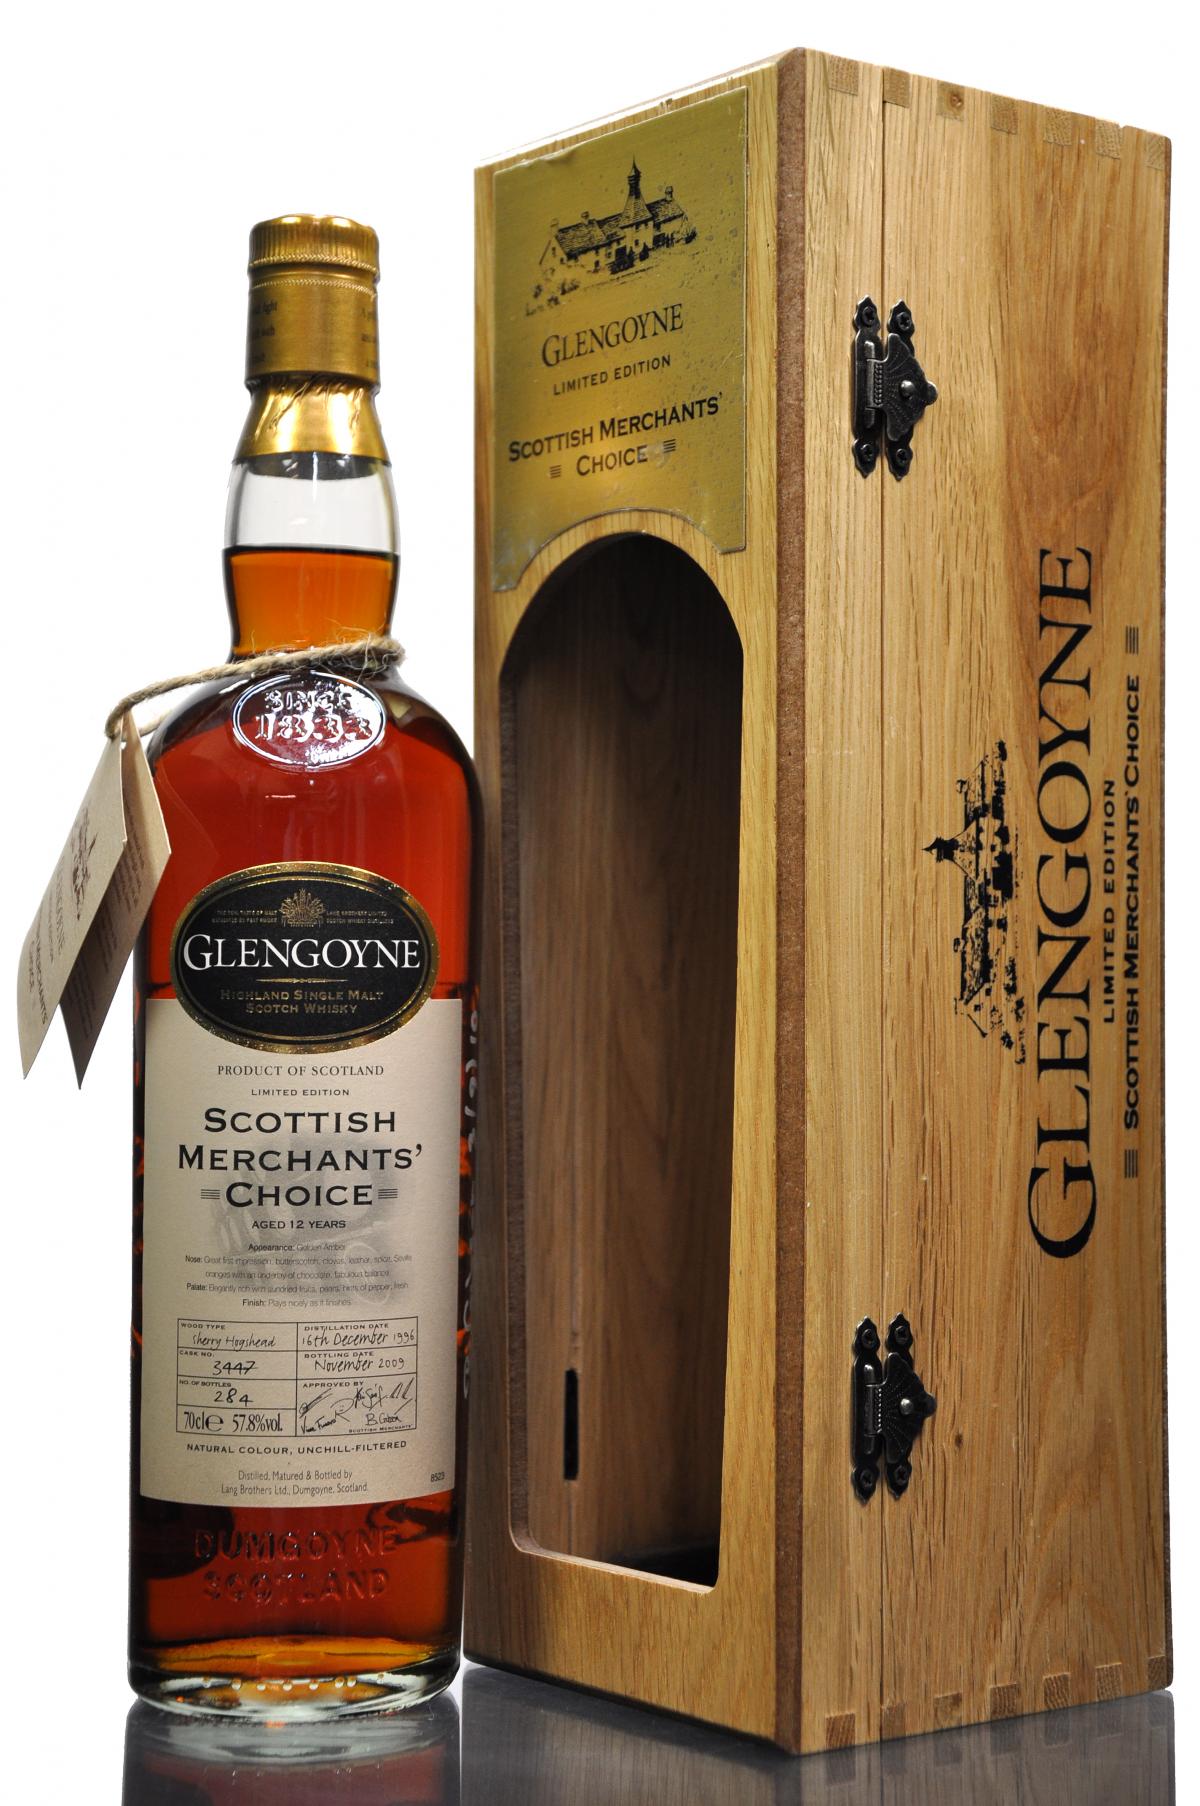 Glengoyne 1996-2009 - Single Cask 3447 - Scottish Merchants Choice